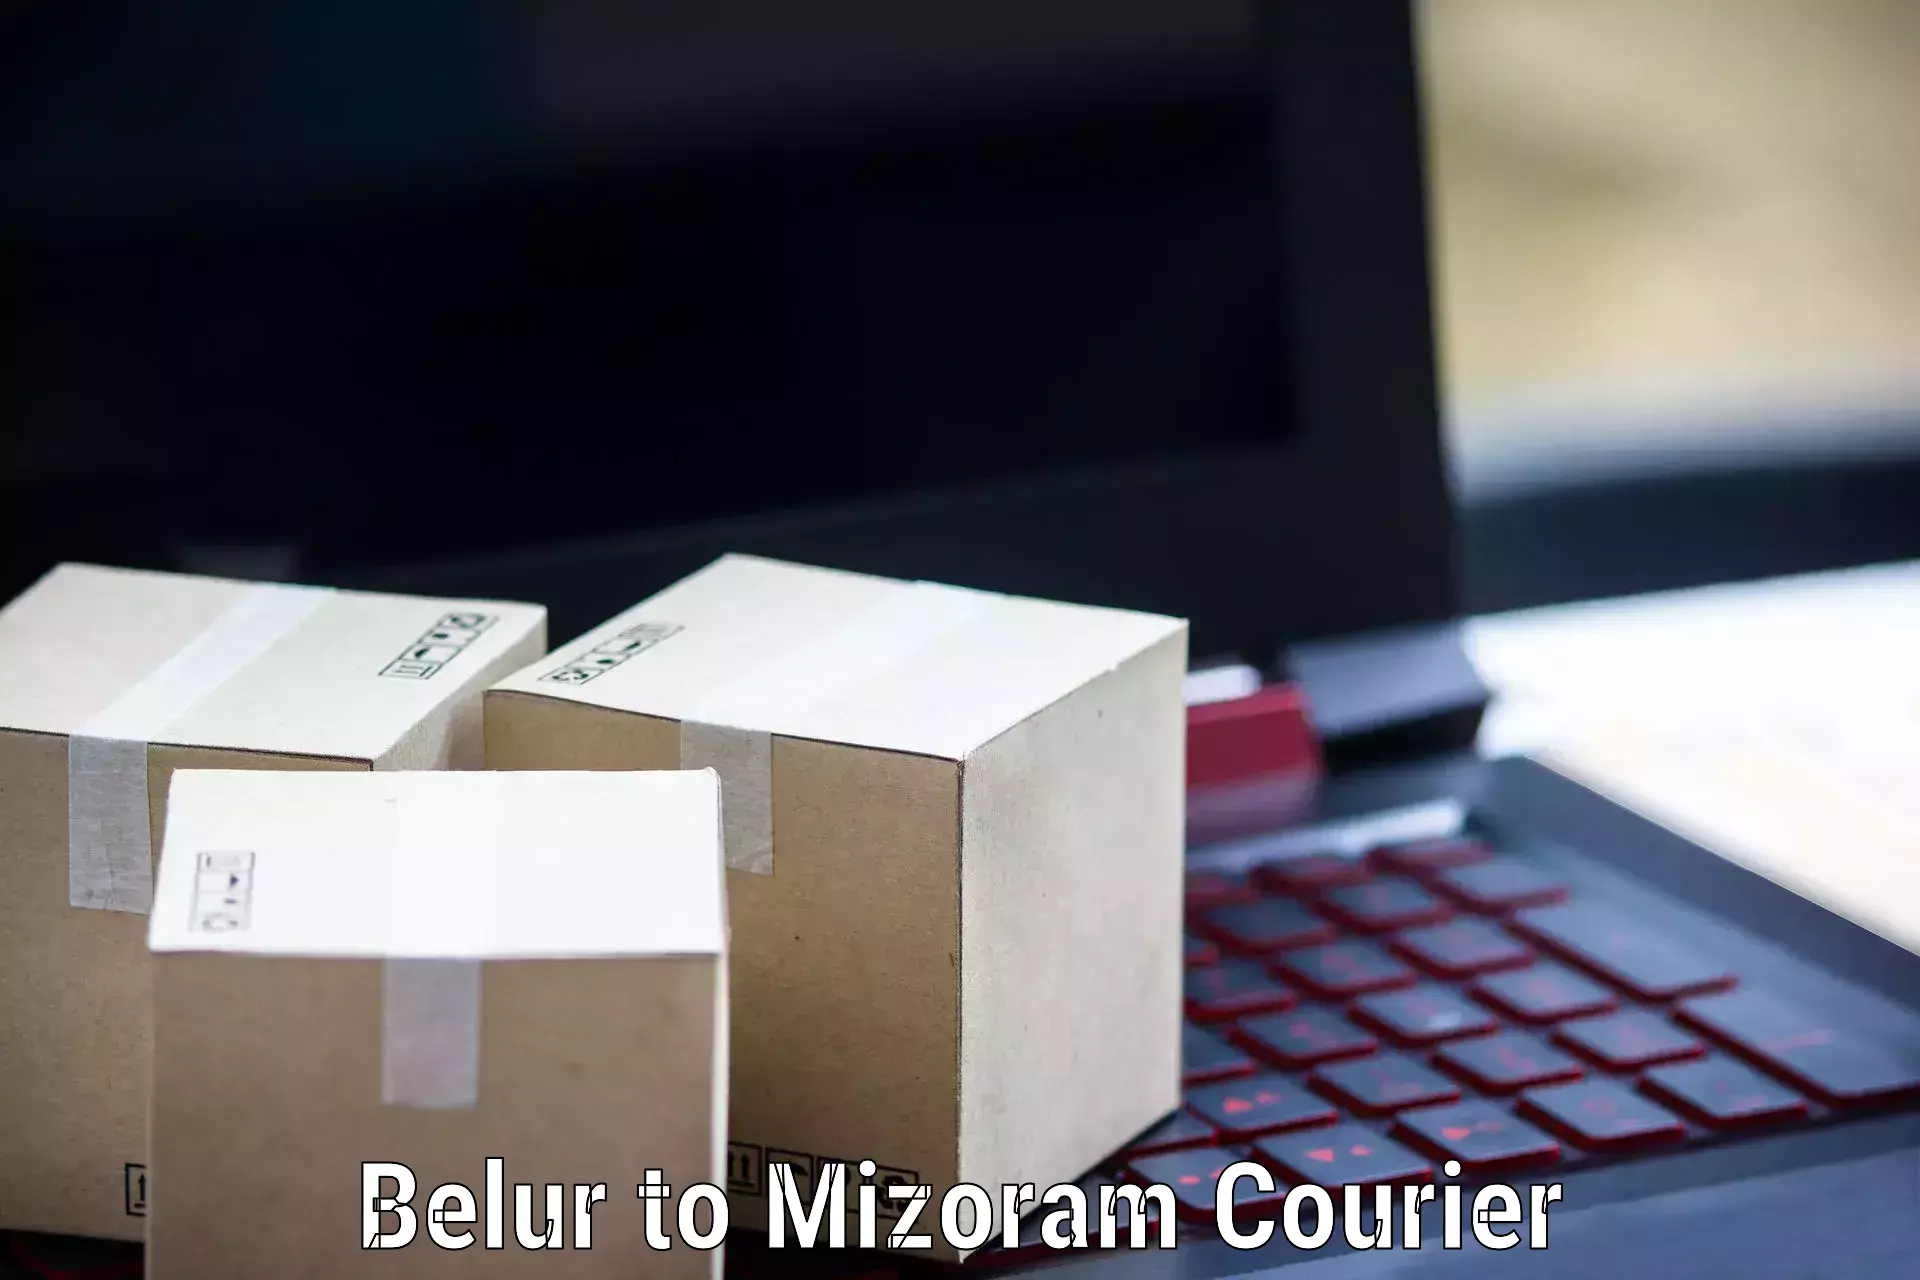 Courier service partnerships Belur to Mizoram